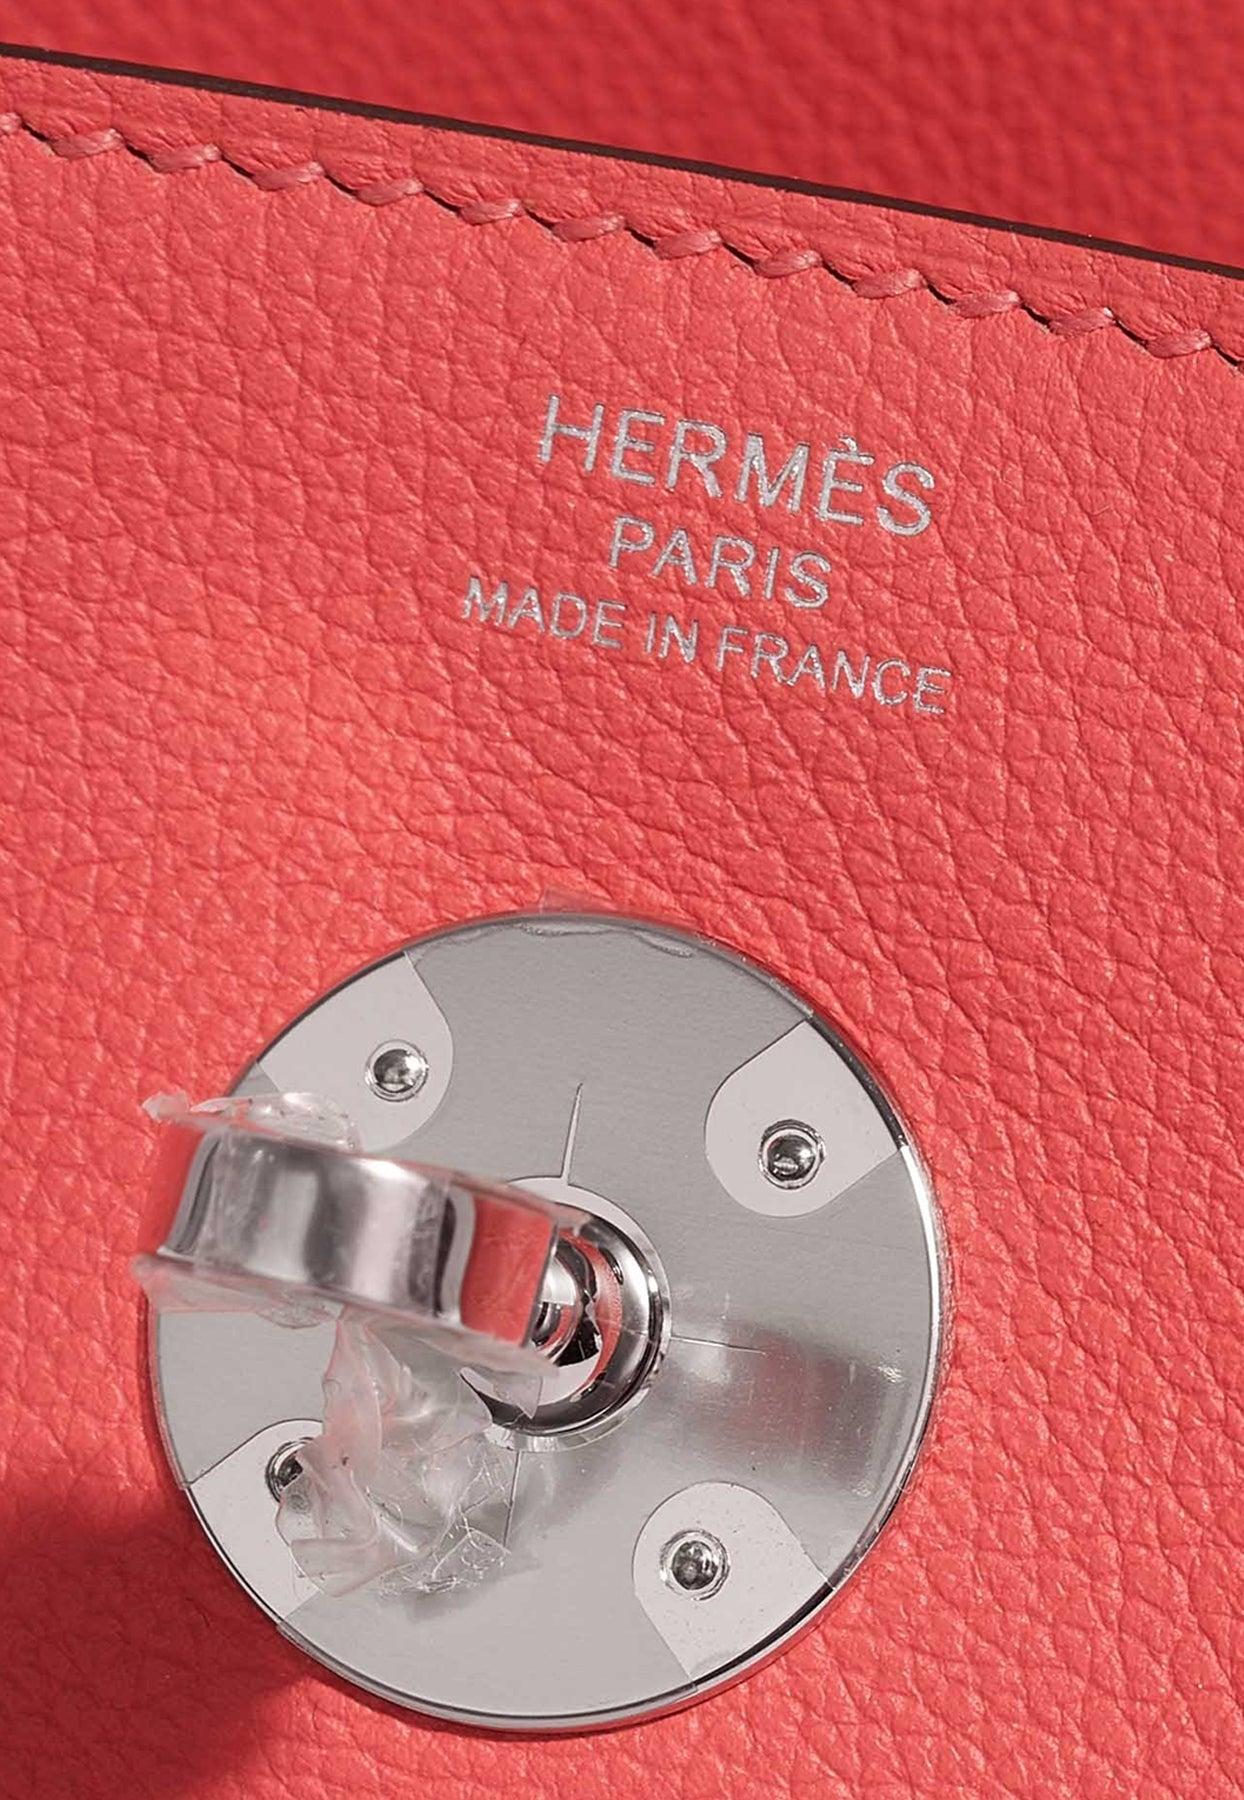 Hermès Lindy 26 Bleu Lin Evercolor Palladium Hardware – Coco Approved Studio